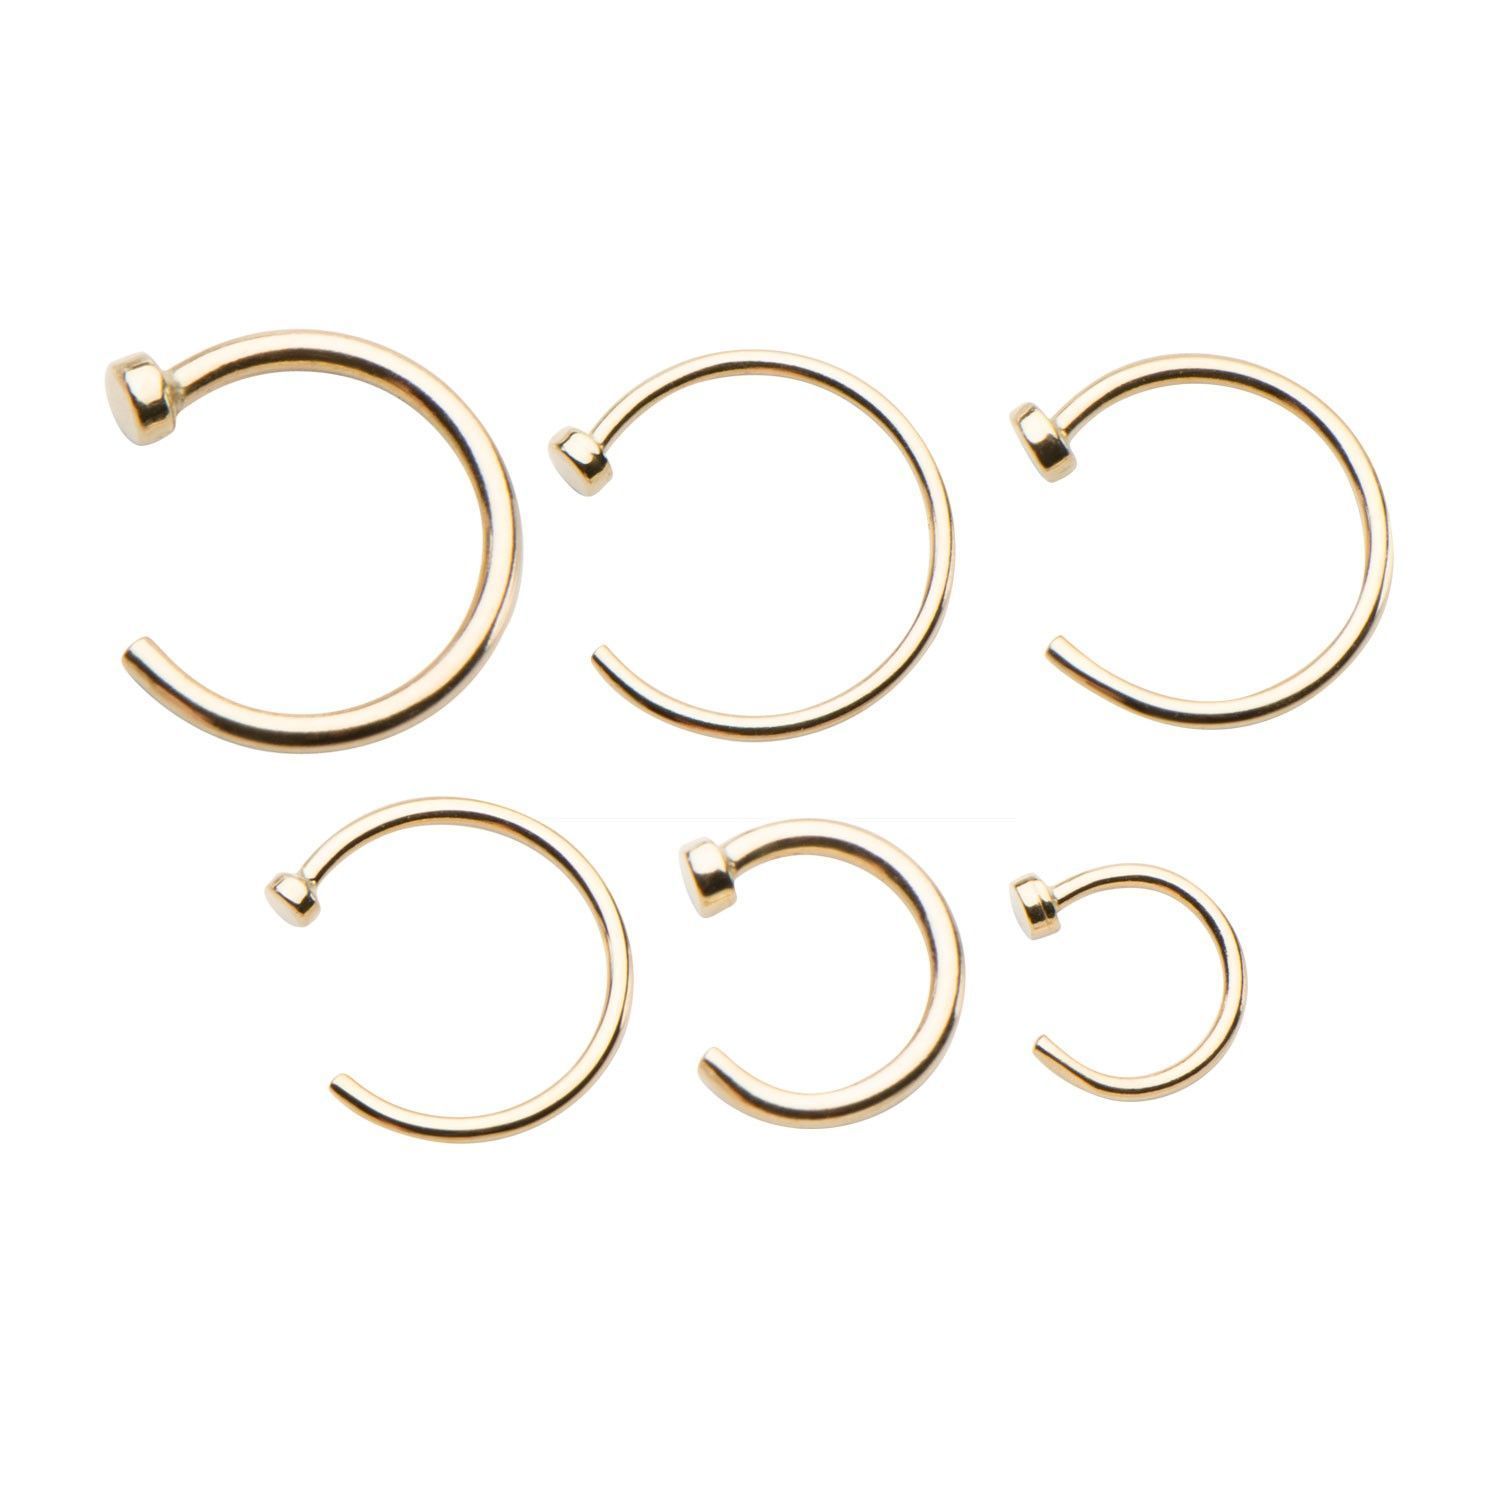 Nose Ring - C-Shaped Nose Ring 14kt Flat Back C-Shape Nose Rings with 1/4, 5/16 and 3/8 Diameter sbv14kc0158 -Rebel Bod-RebelBod